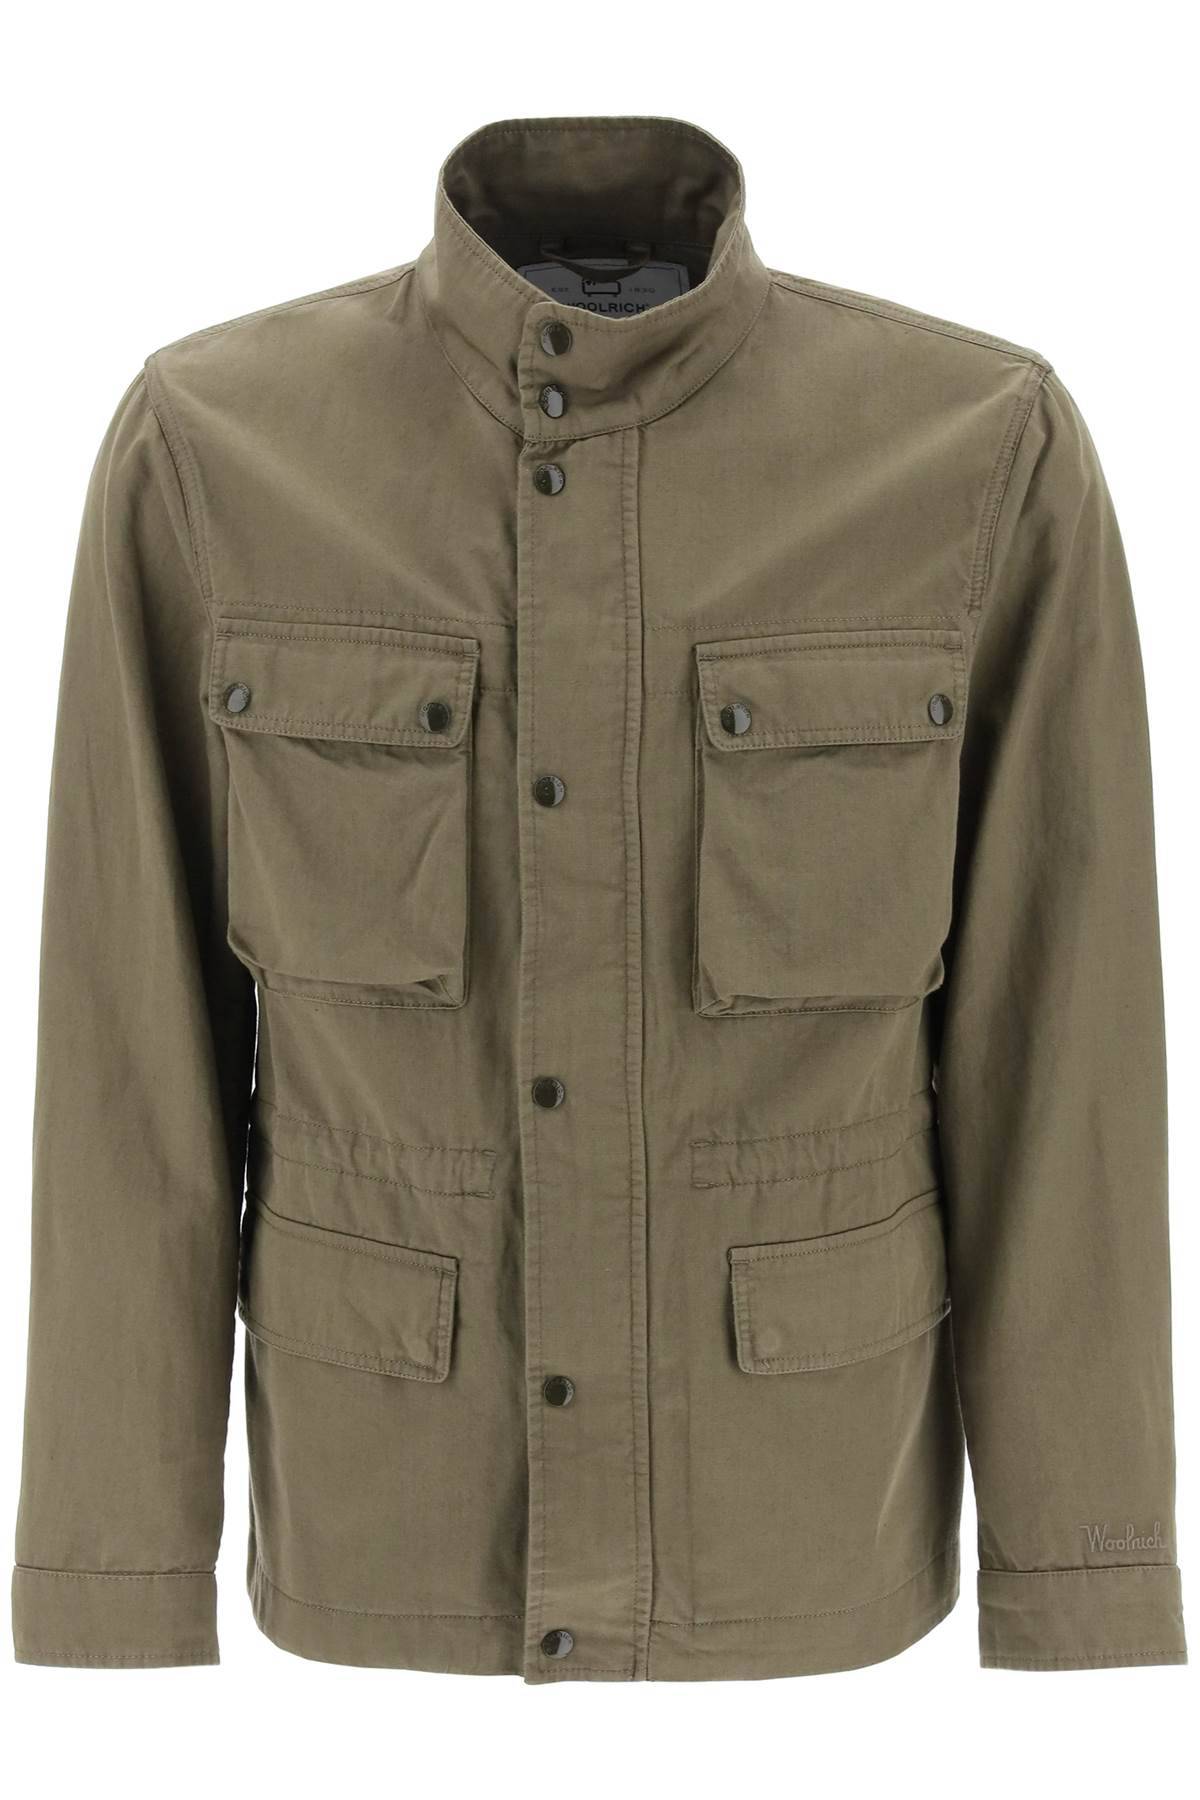 Woolrich WOOLRICH "field jacket in cotton and linen blend"